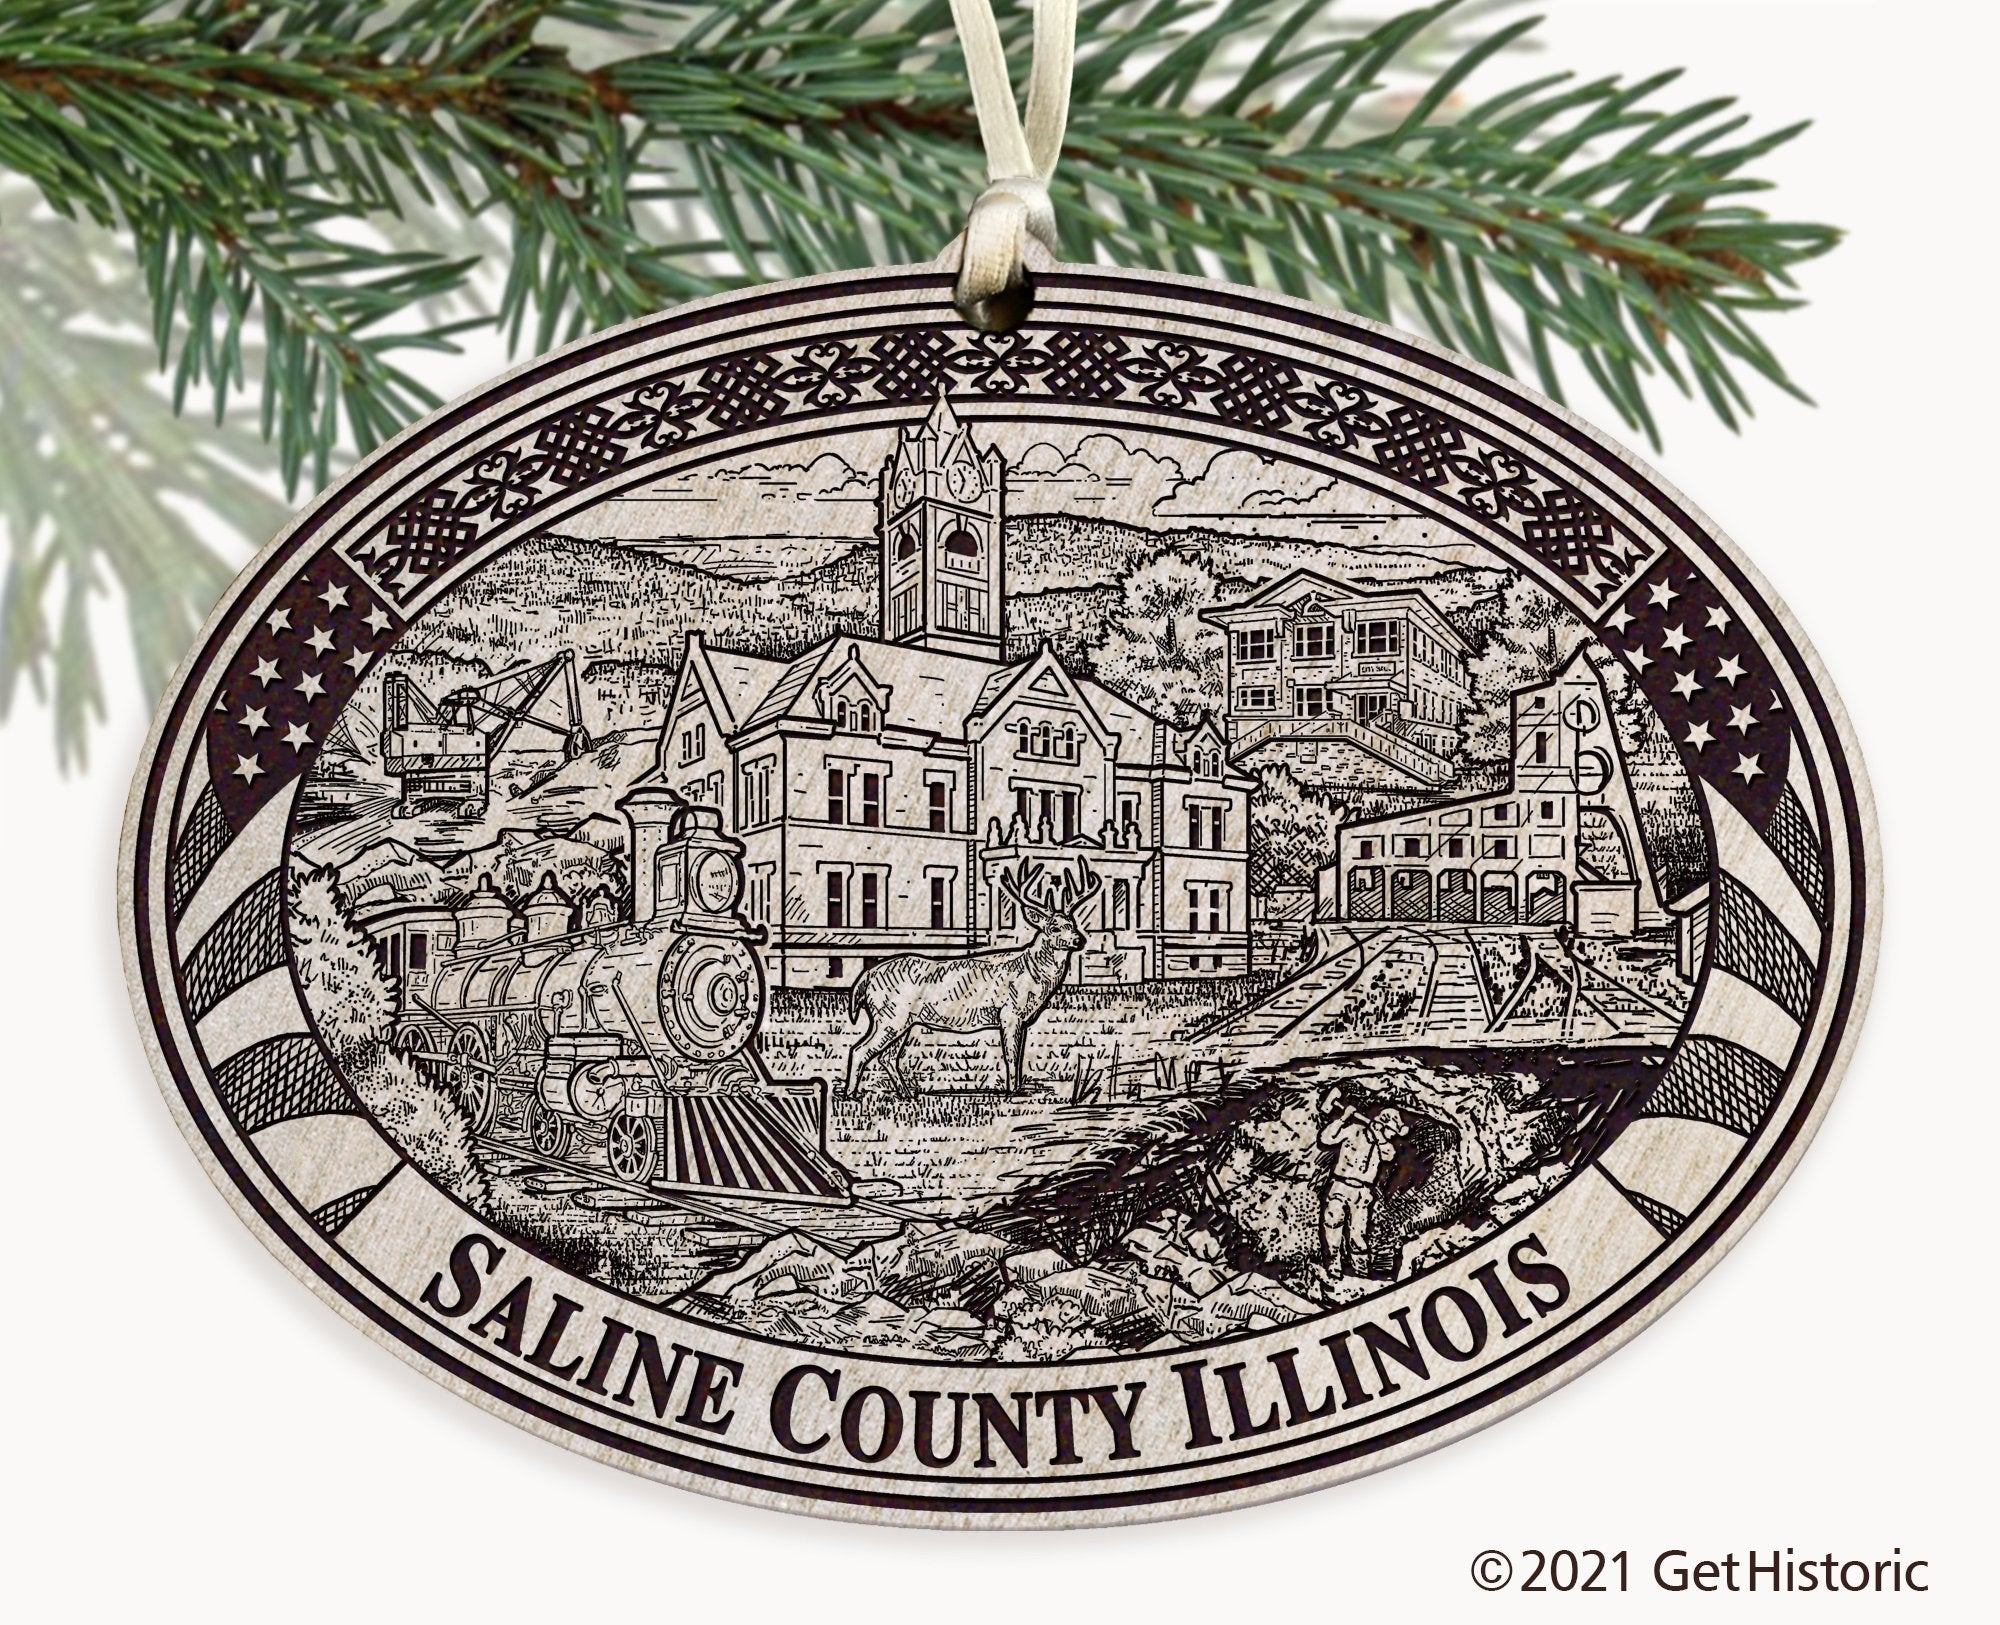 Saline County Illinois Engraved Ornament